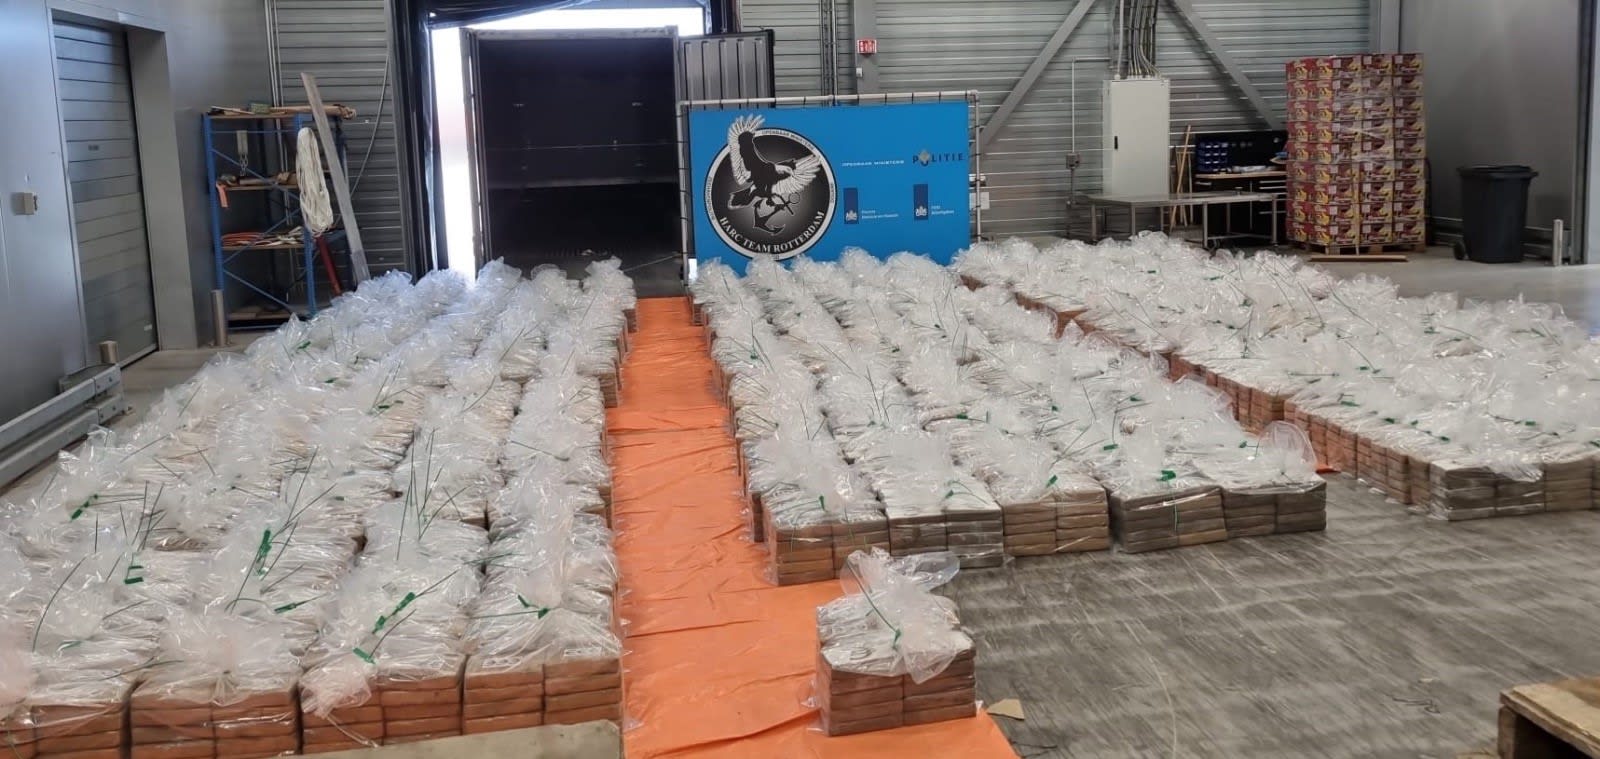 Grootste drugsvangst ooit in Rotterdamse haven: ruim 8000 kilo aan cocaïne onderschept